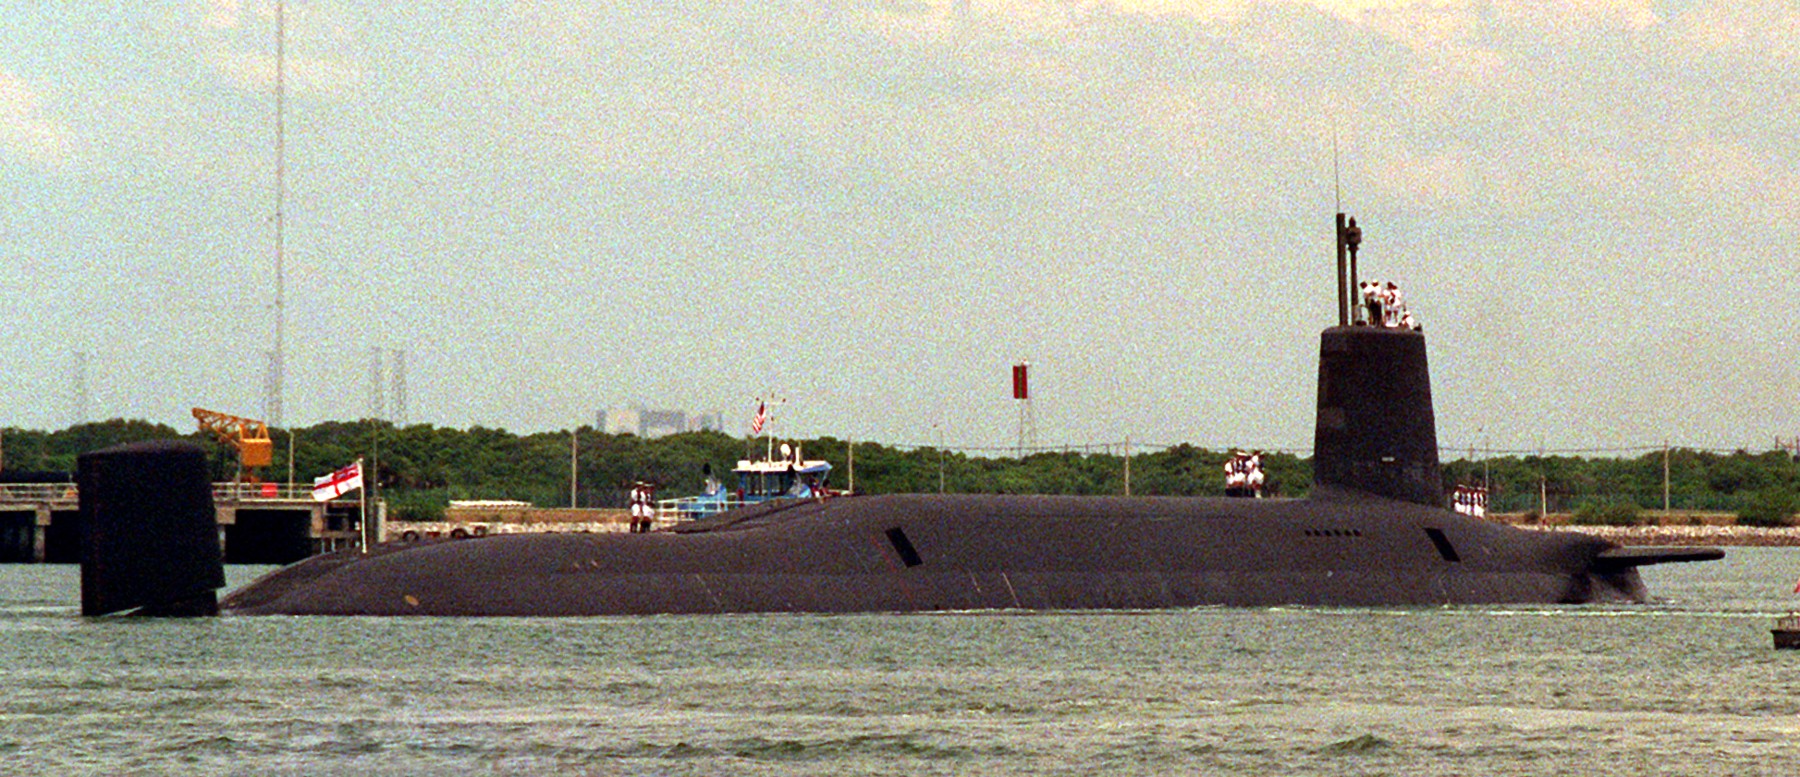 s28 hms vanguard ssbn ballistic missile submarine royal navy 02